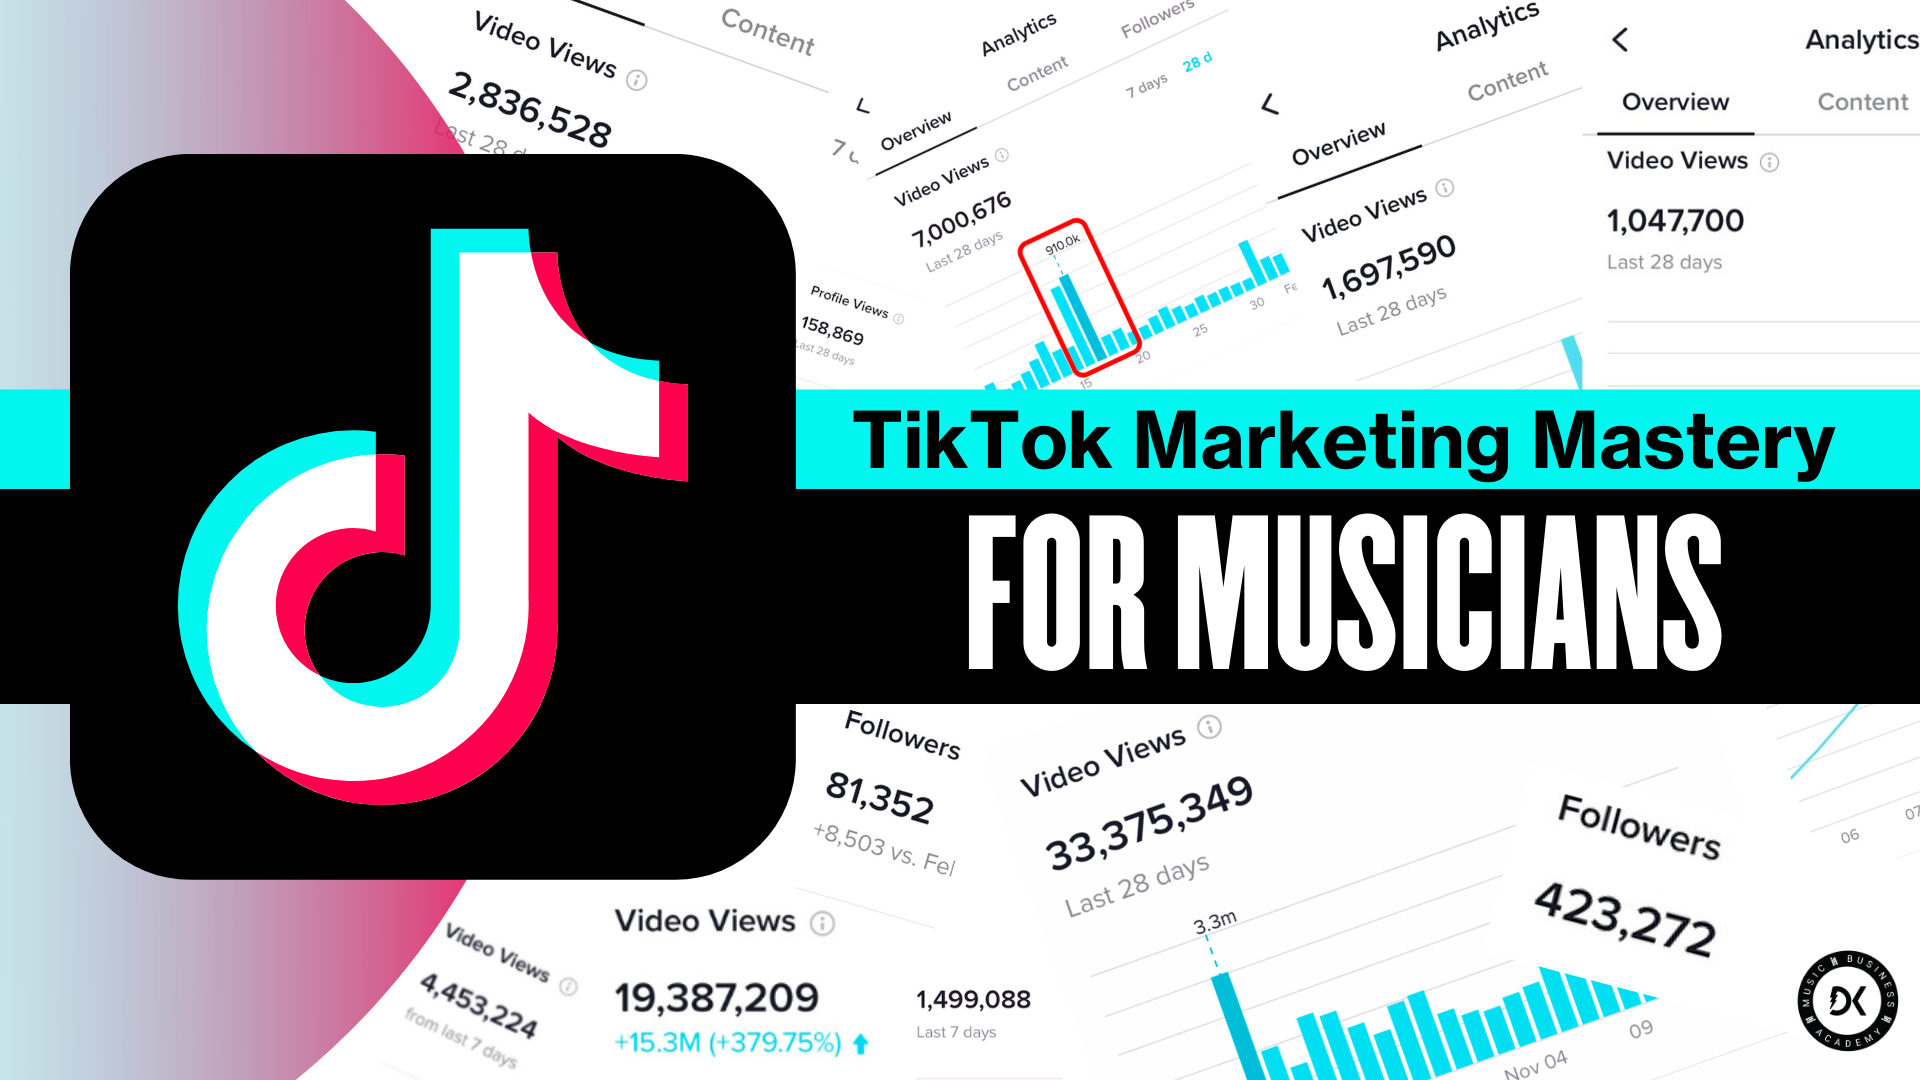 TikTok Marketing Mastery For Musicians